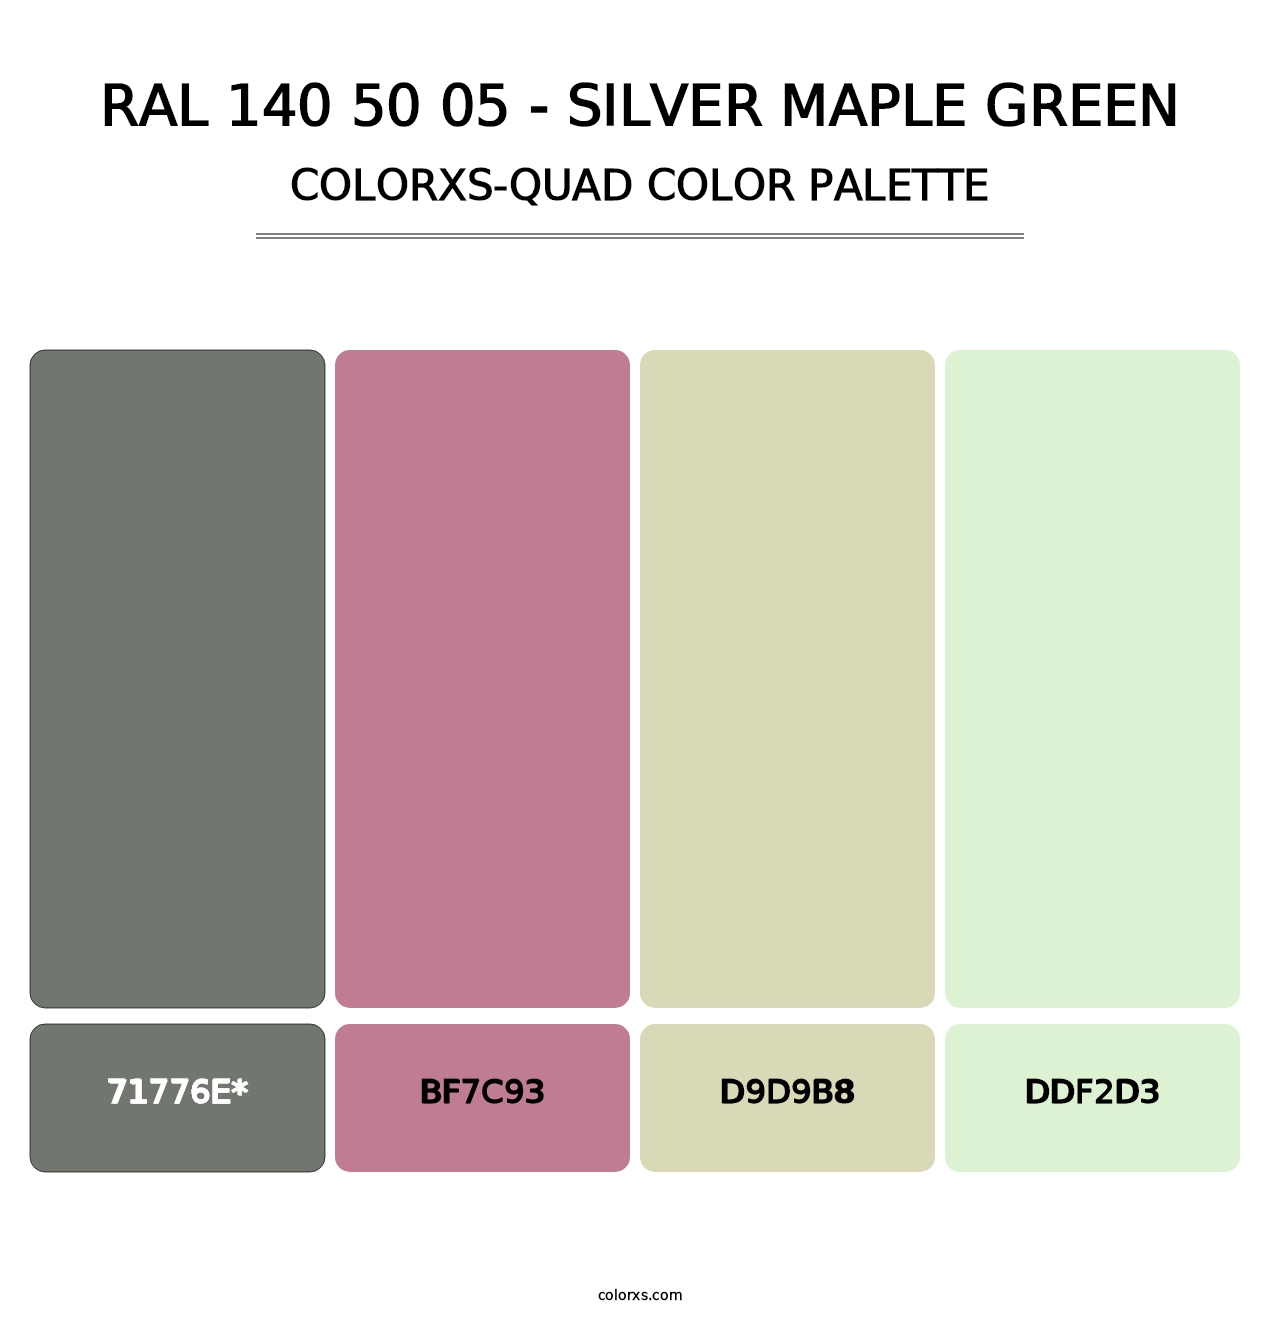 RAL 140 50 05 - Silver Maple Green - Colorxs Quad Palette